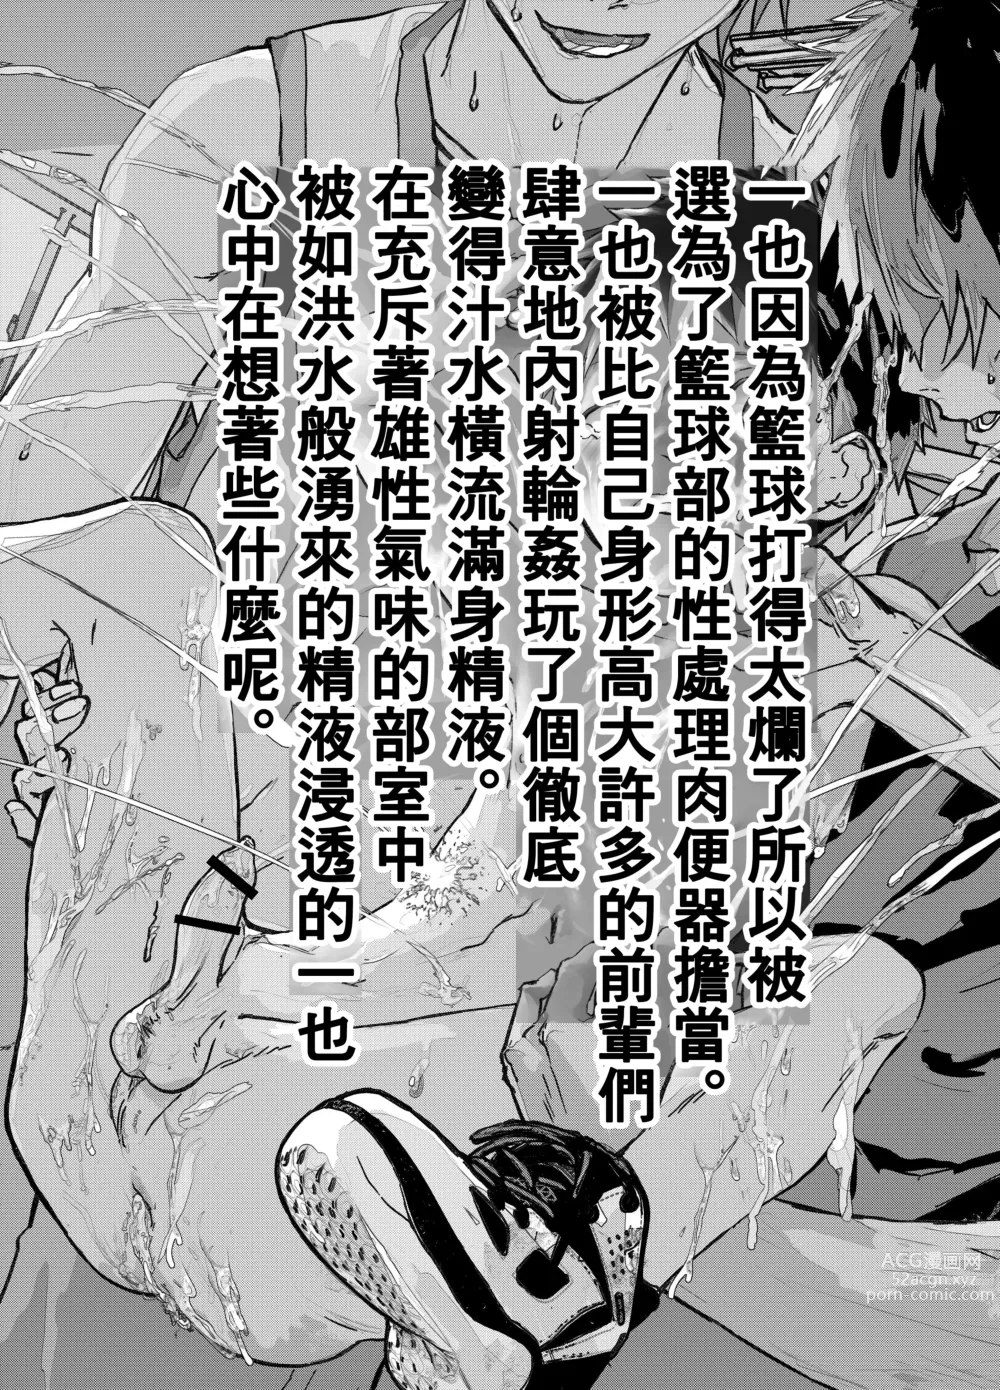 Page 3 of doujinshi 谁让我篮球打得太菜了呢！